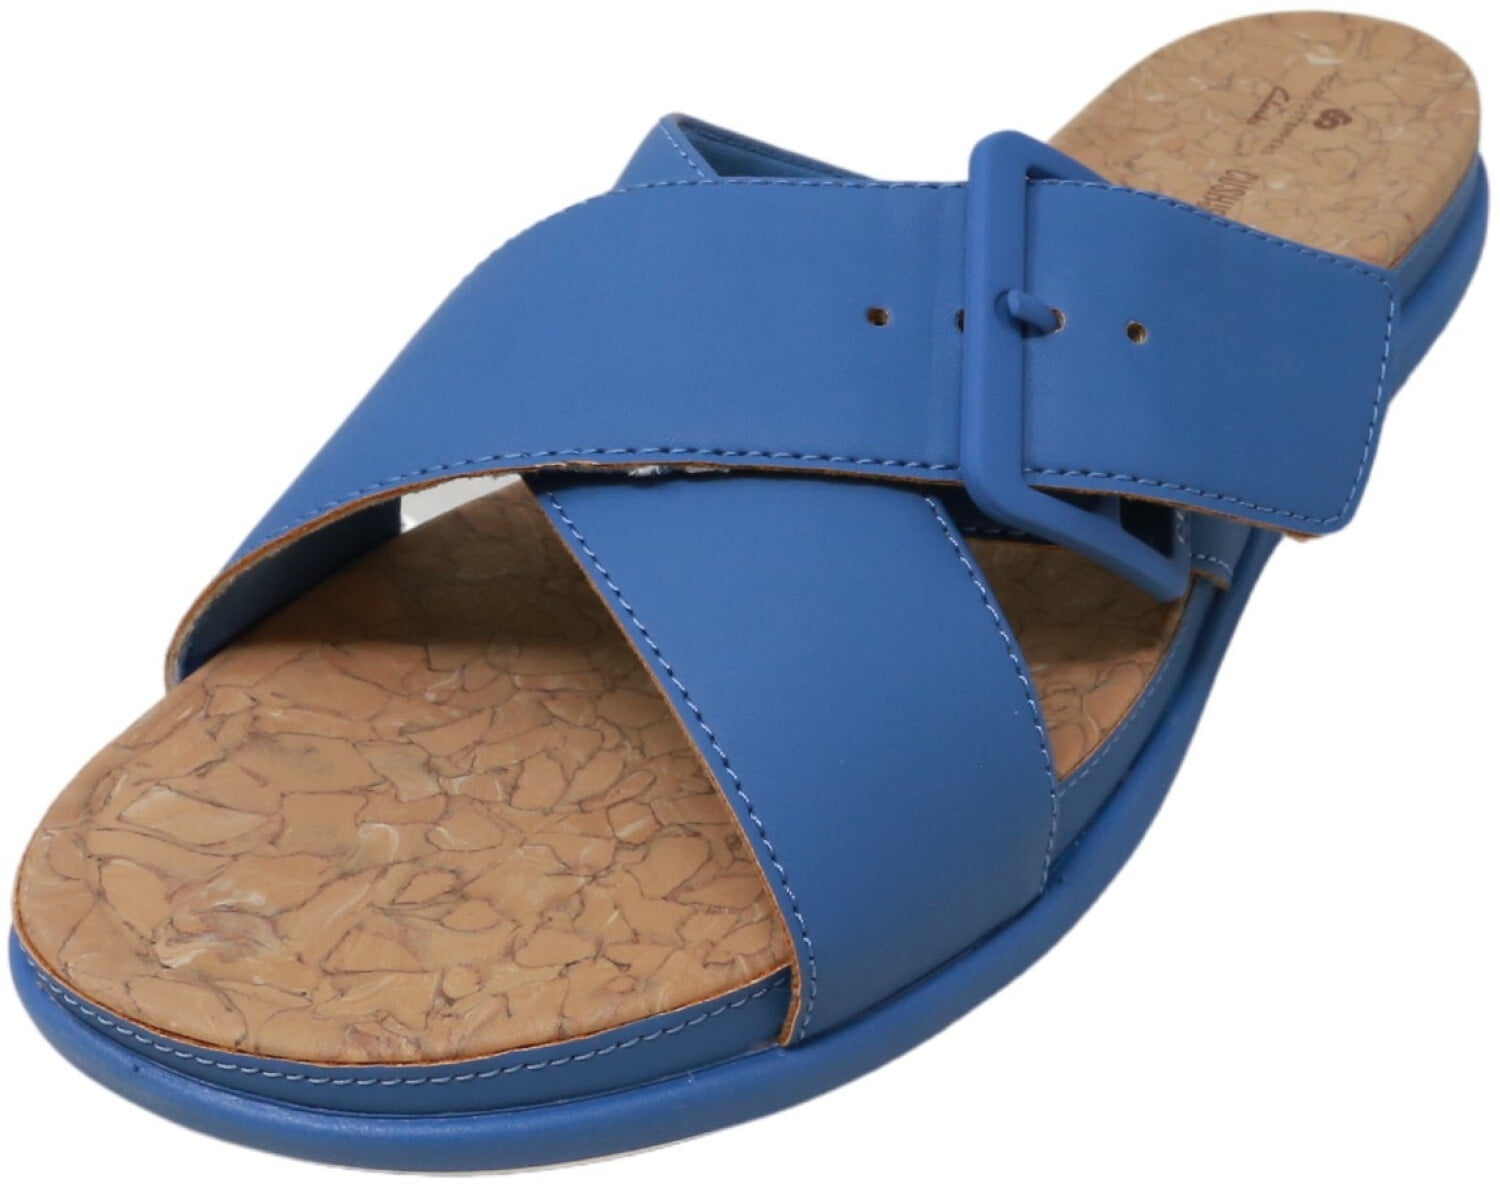 clarks blue leather sandals